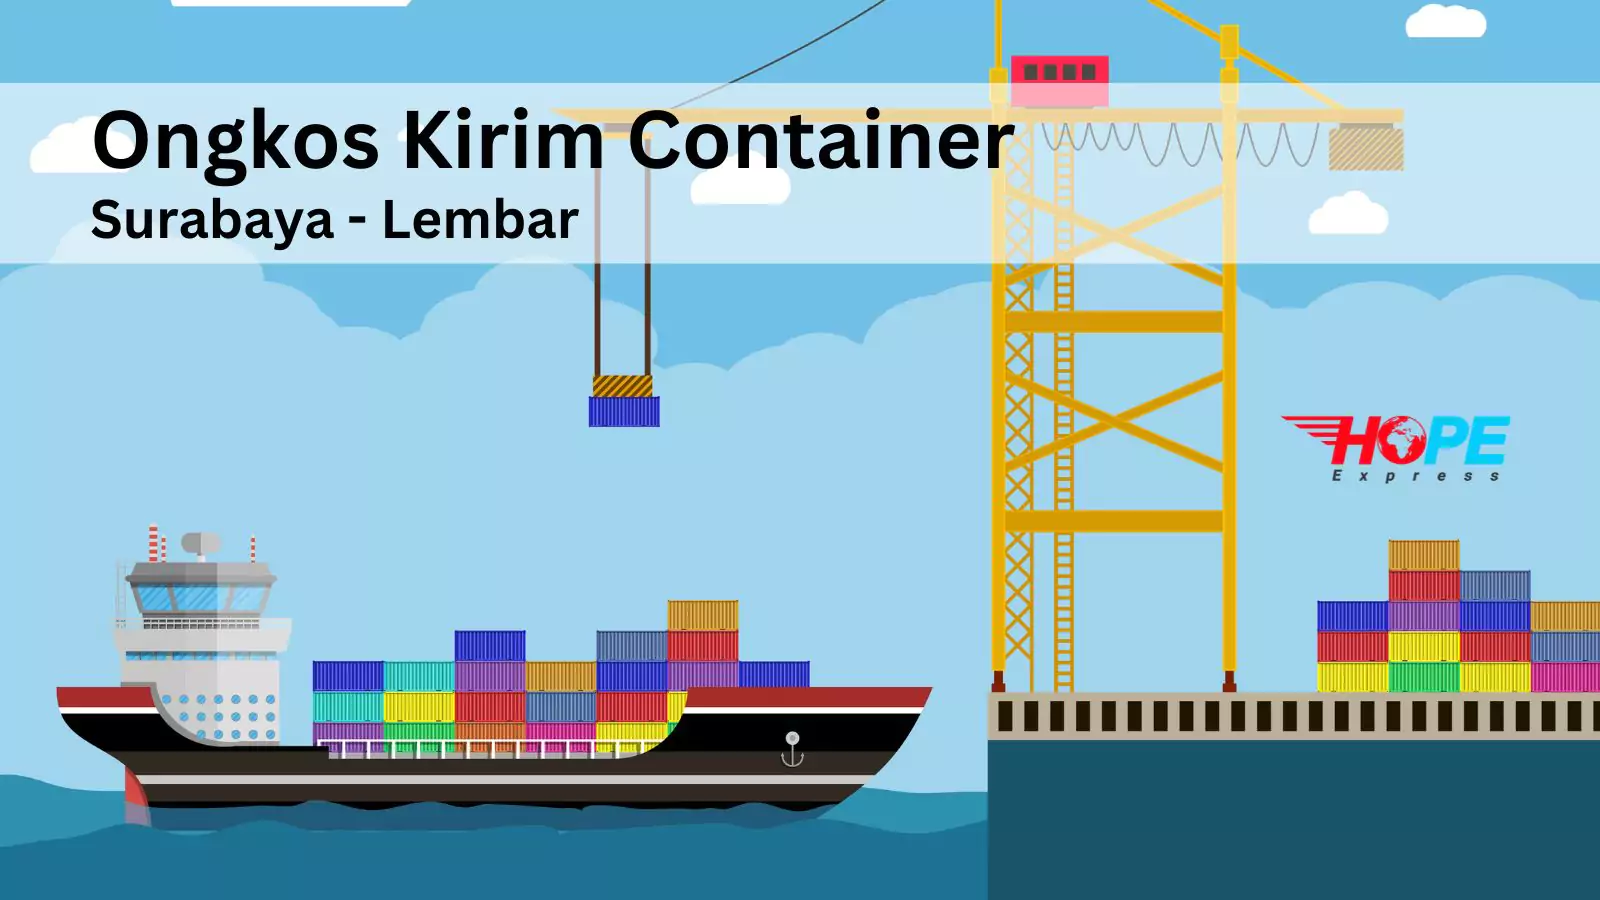 Ongkos Kirim Container Surabaya Lembar